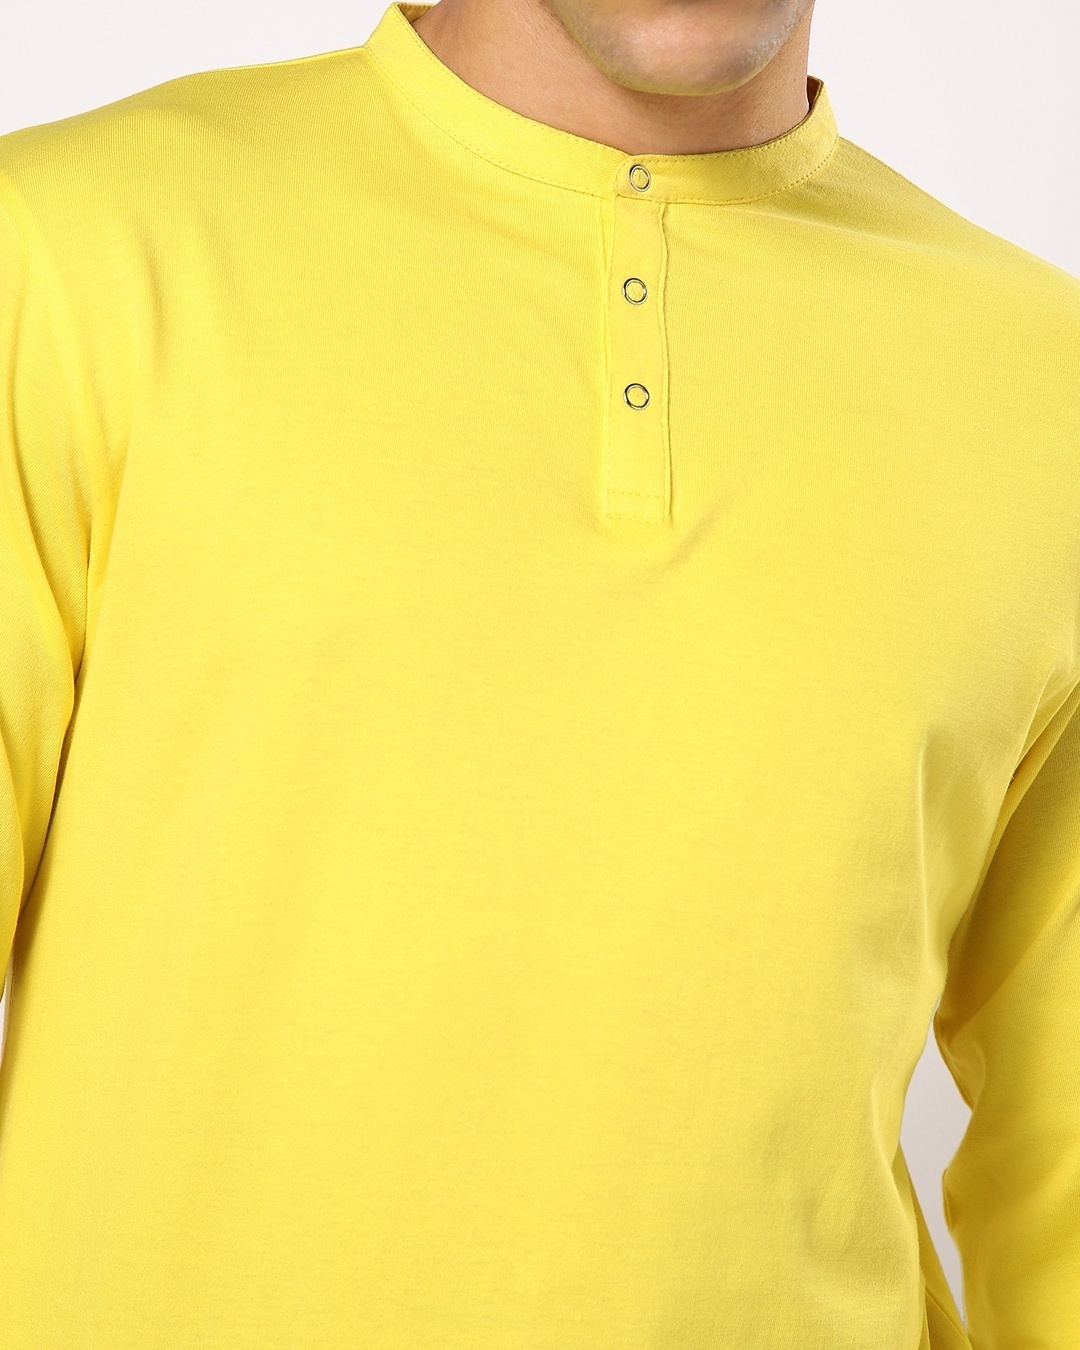 Shop Men's Yellow Plus Size Henley T-shirt